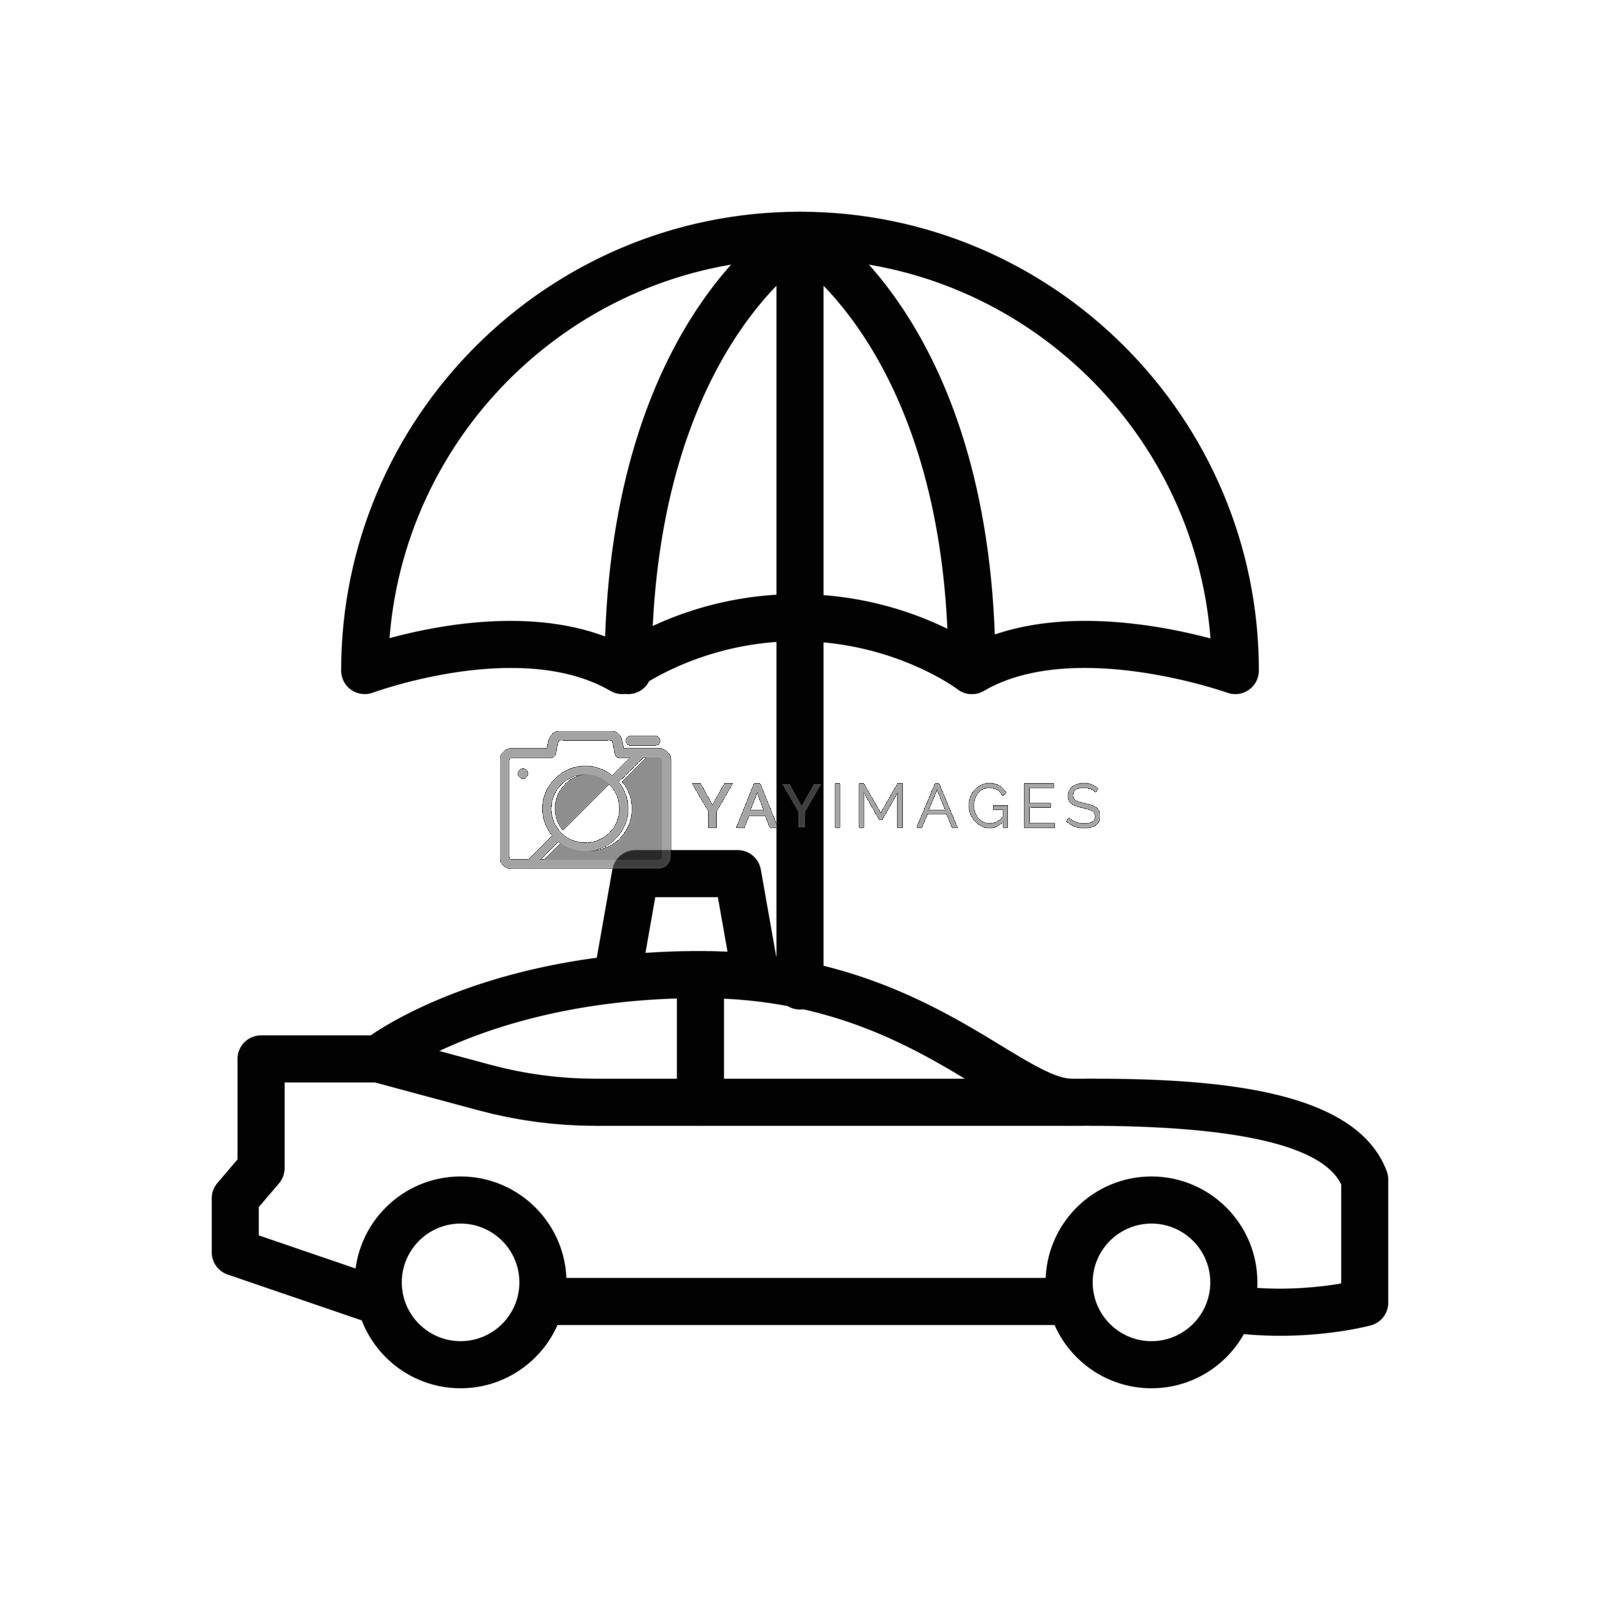 Royalty free image of umbrella by vectorstall